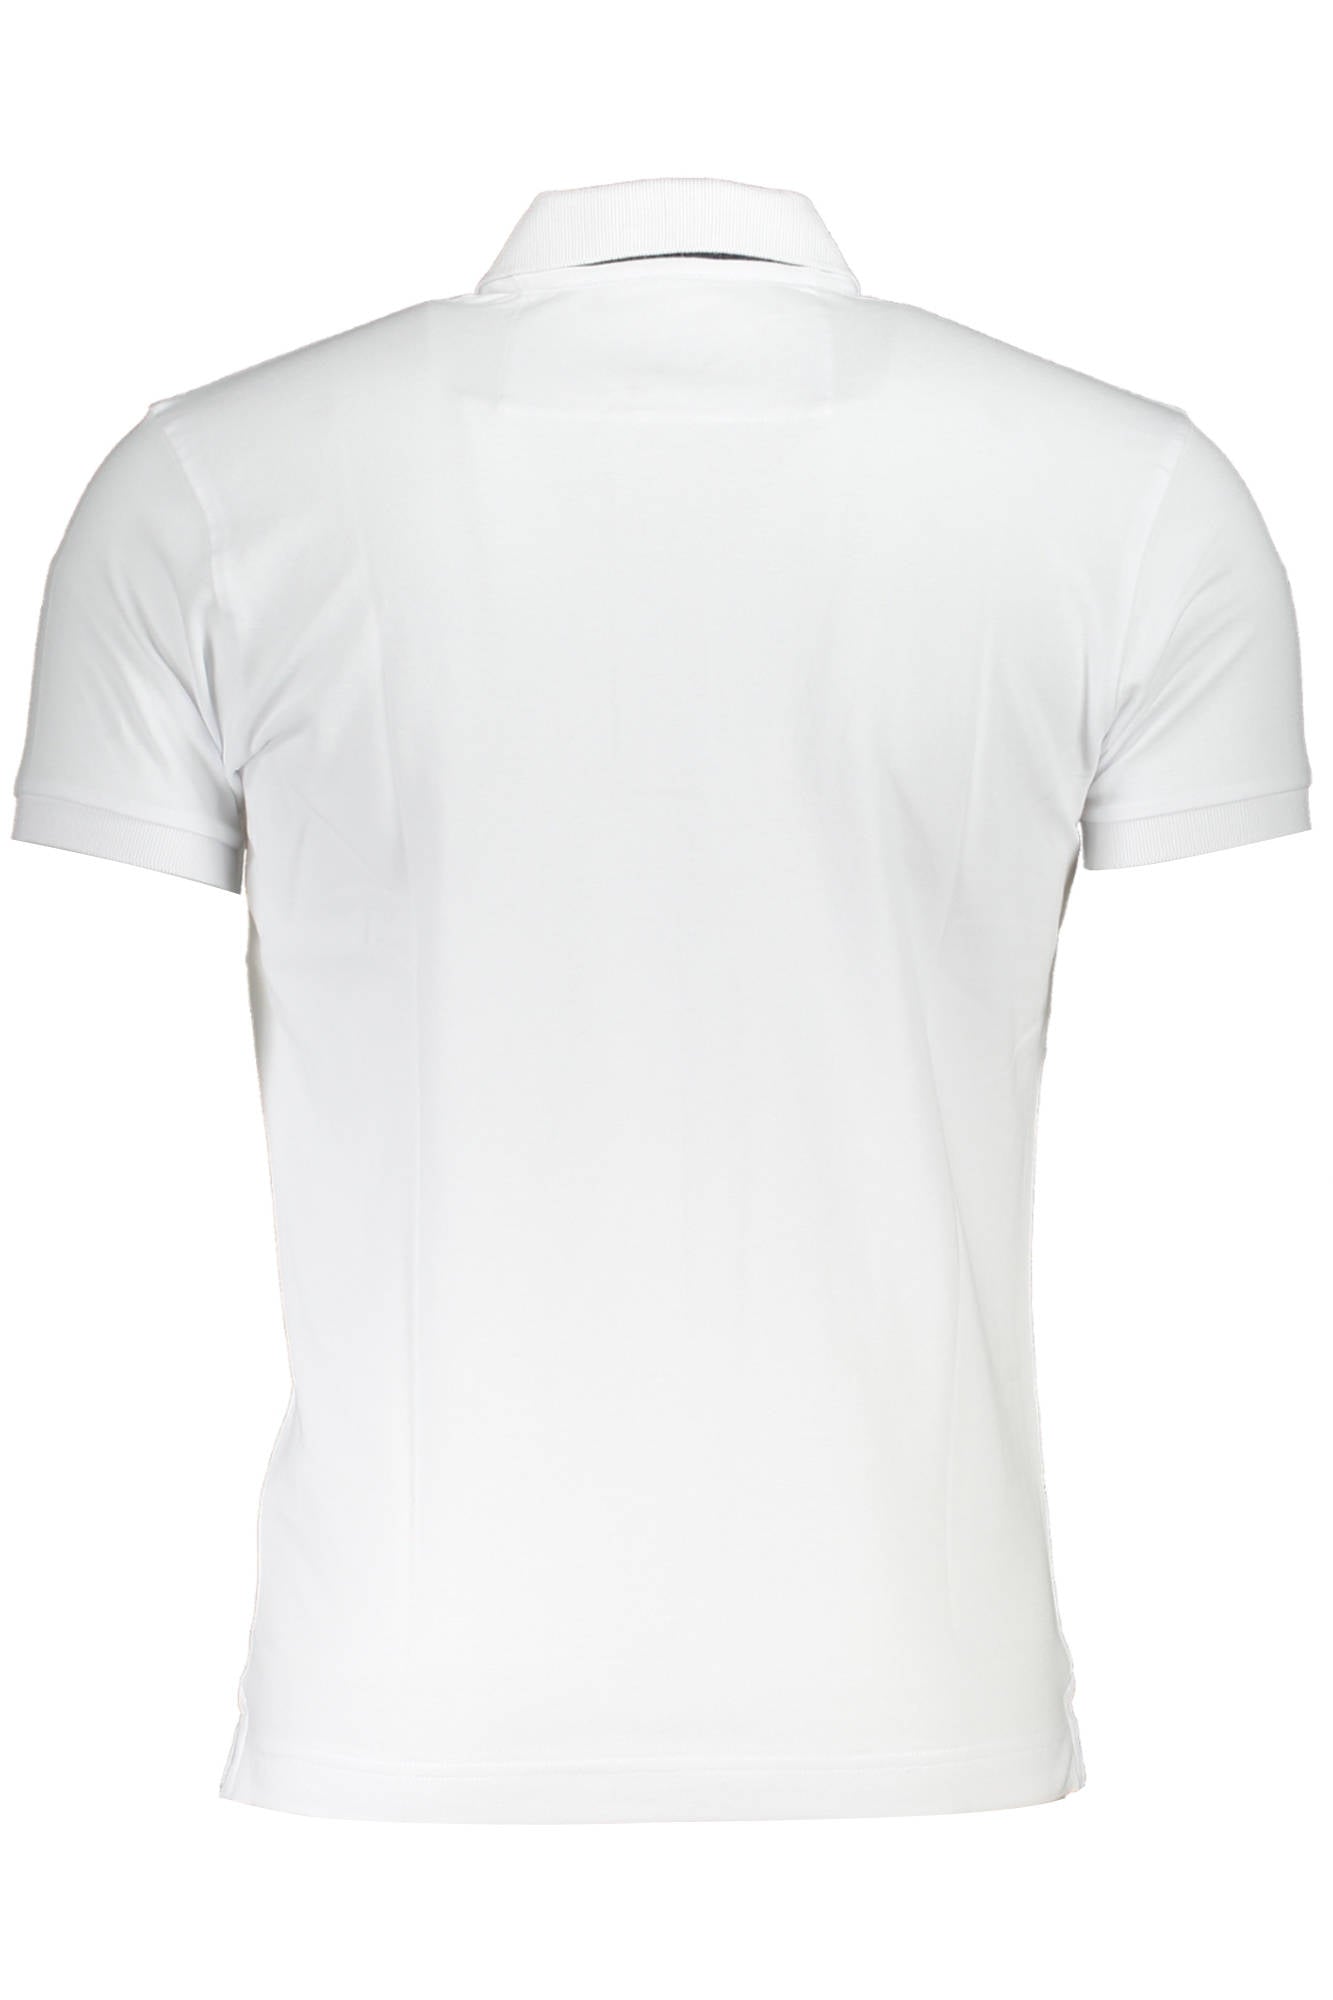 La Martina White Polo Shirt - Fizigo